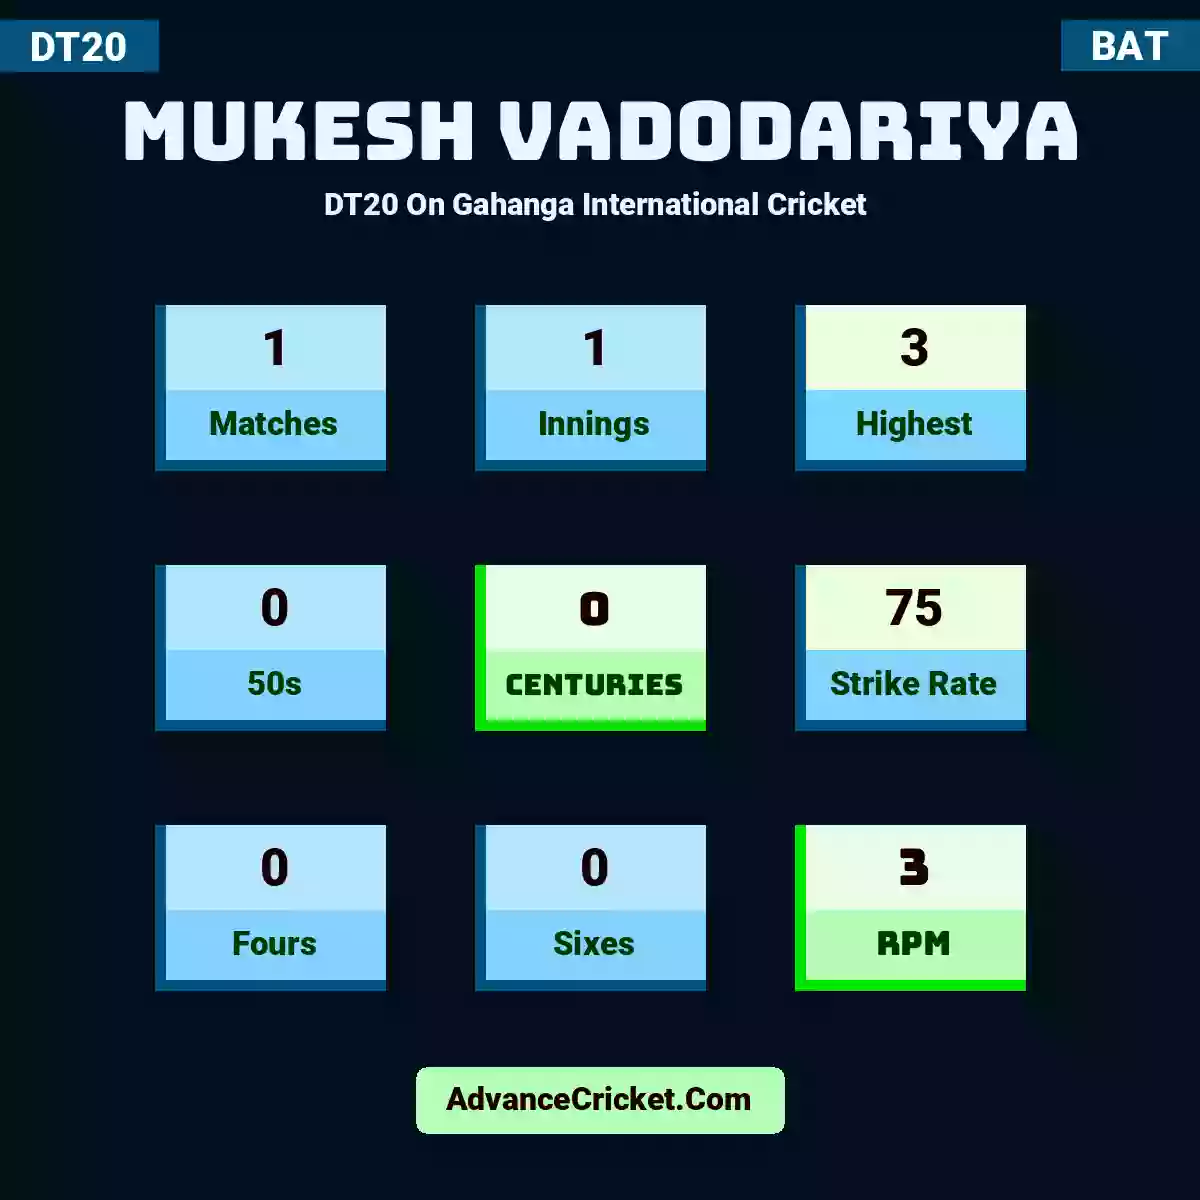 Mukesh Vadodariya DT20  On Gahanga International Cricket , Mukesh Vadodariya played 1 matches, scored 3 runs as highest, 0 half-centuries, and 0 centuries, with a strike rate of 75. M.Vadodariya hit 0 fours and 0 sixes, with an RPM of 3.